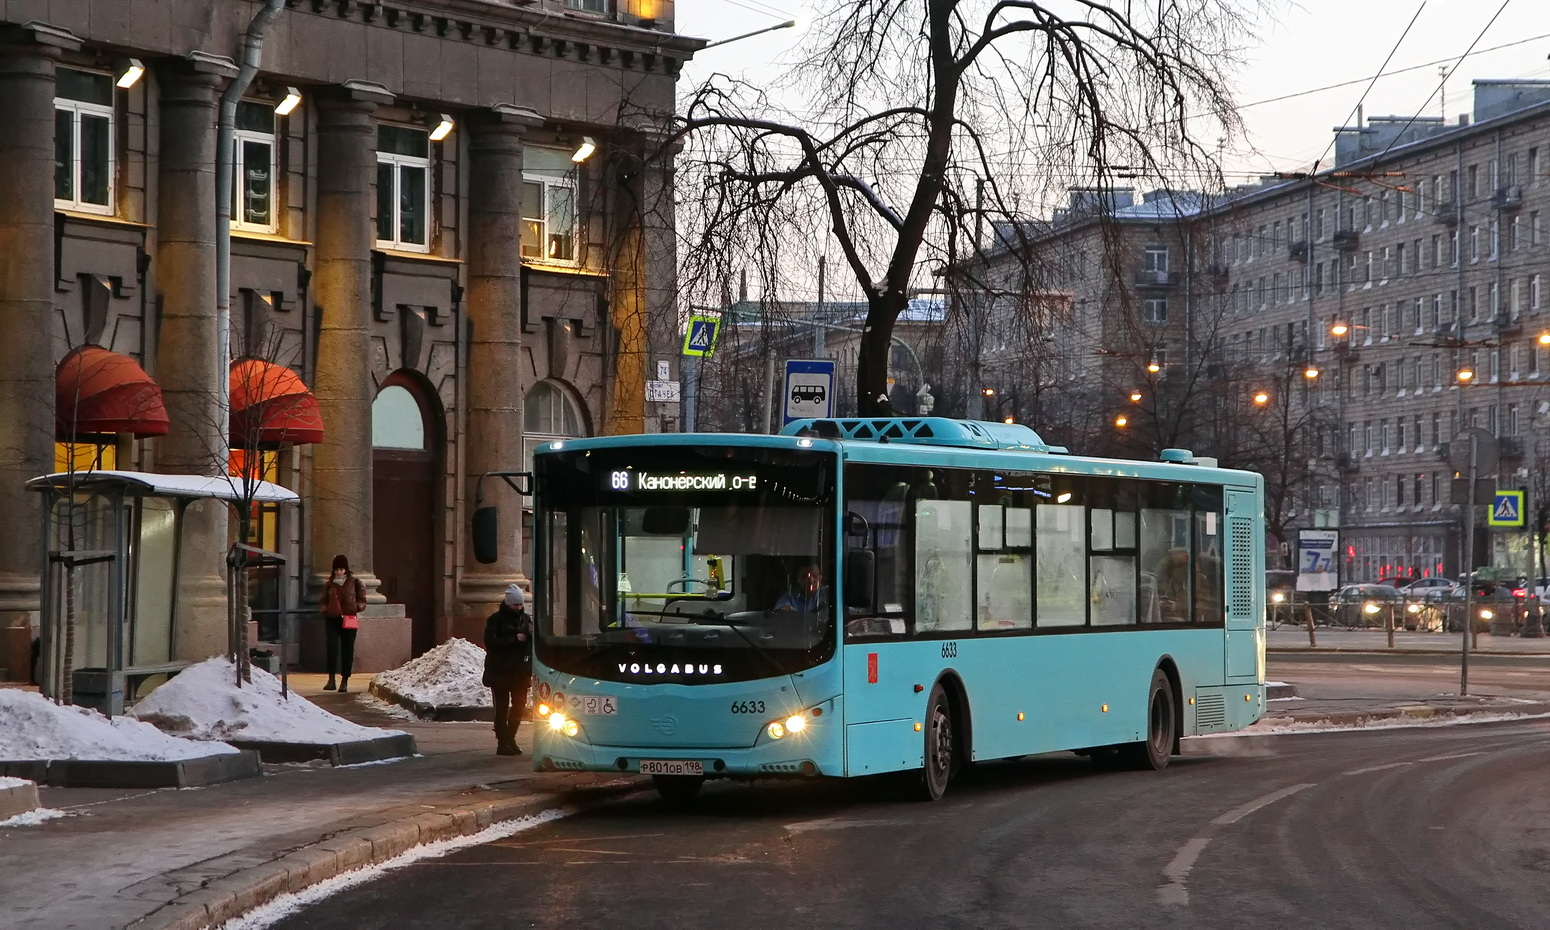 Санкт-Петербург, Volgabus-5270.G4 (LNG) № 6633